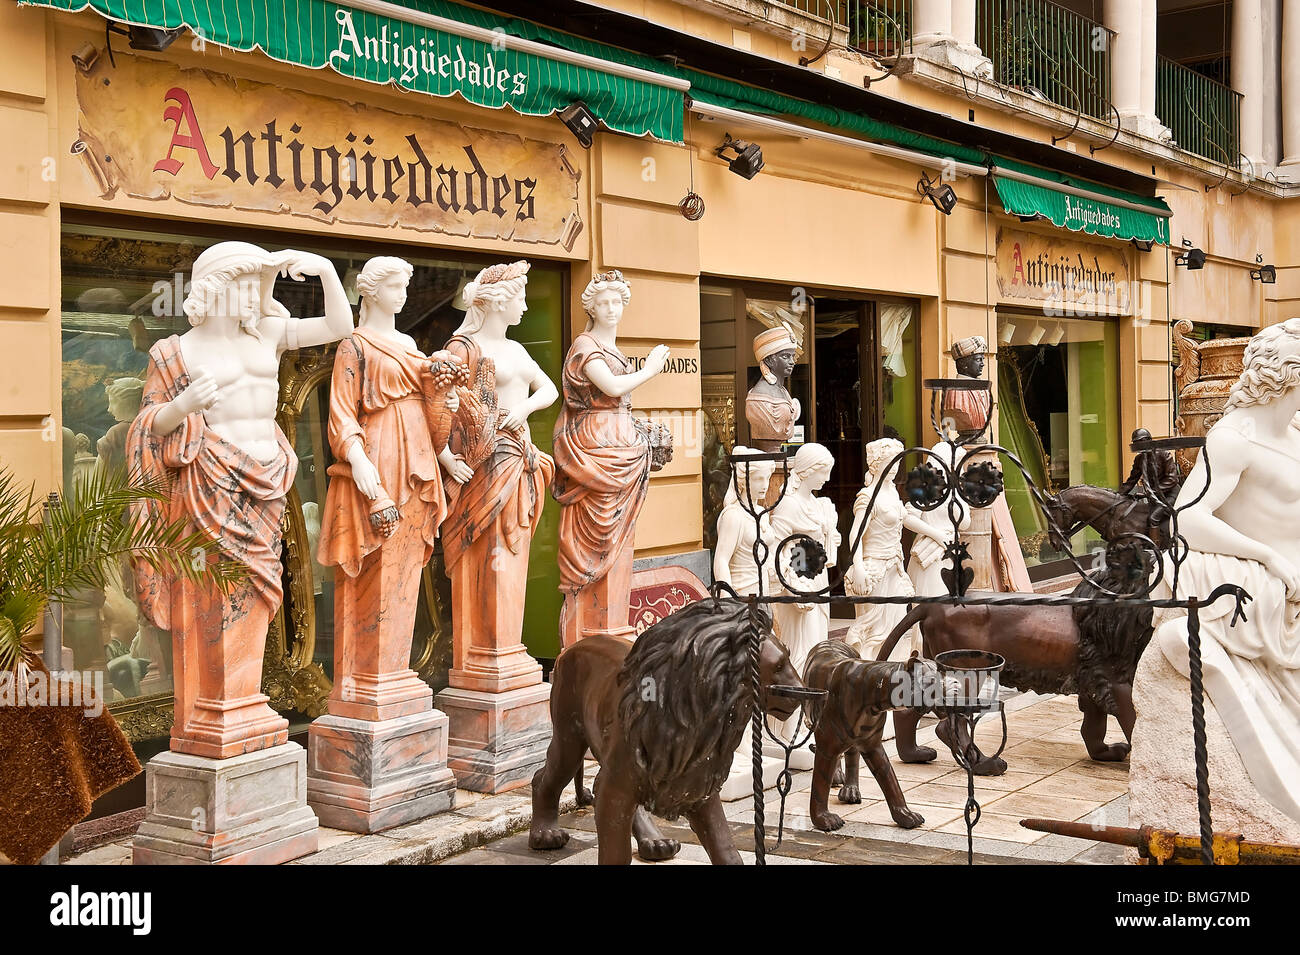 Antique store, Madrid, Spain Stock Photo